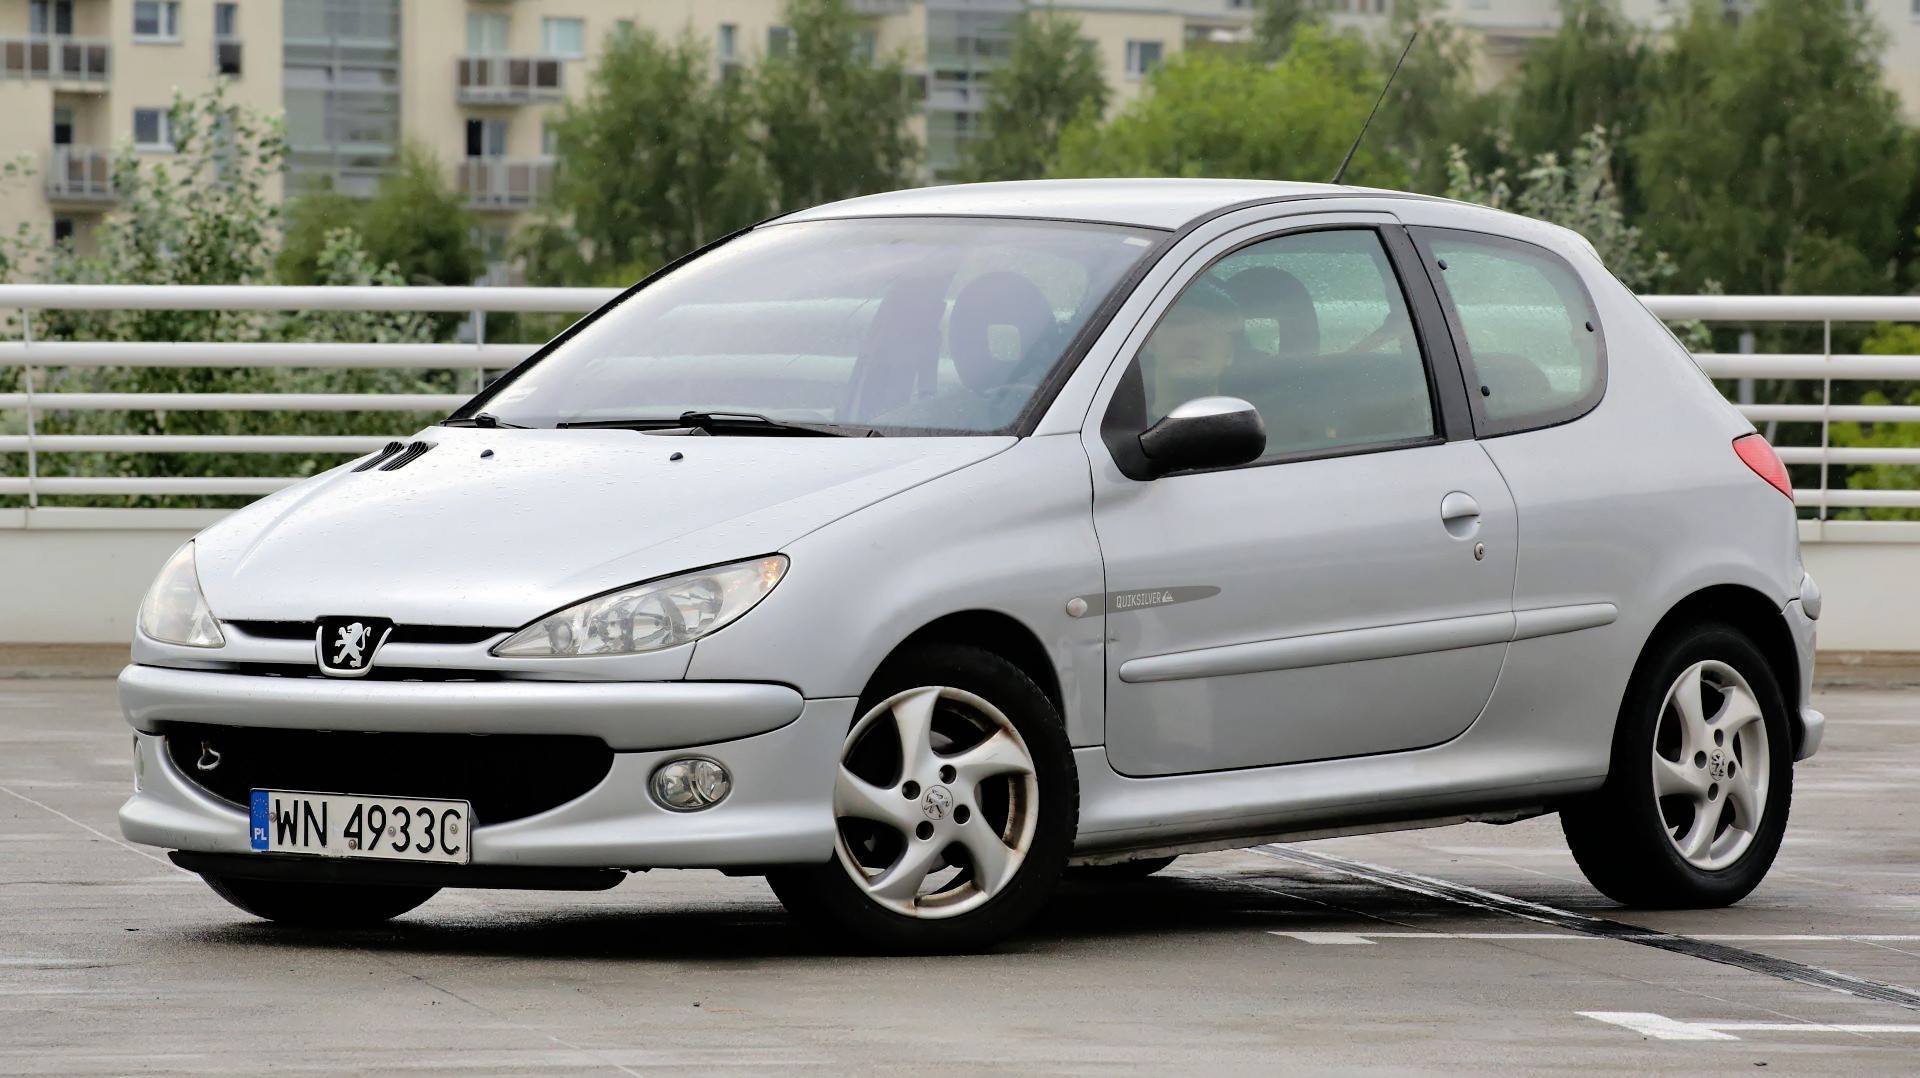 Flicker episode Sanction Używany Peugeot 206 – OPINIE, typowe usterki